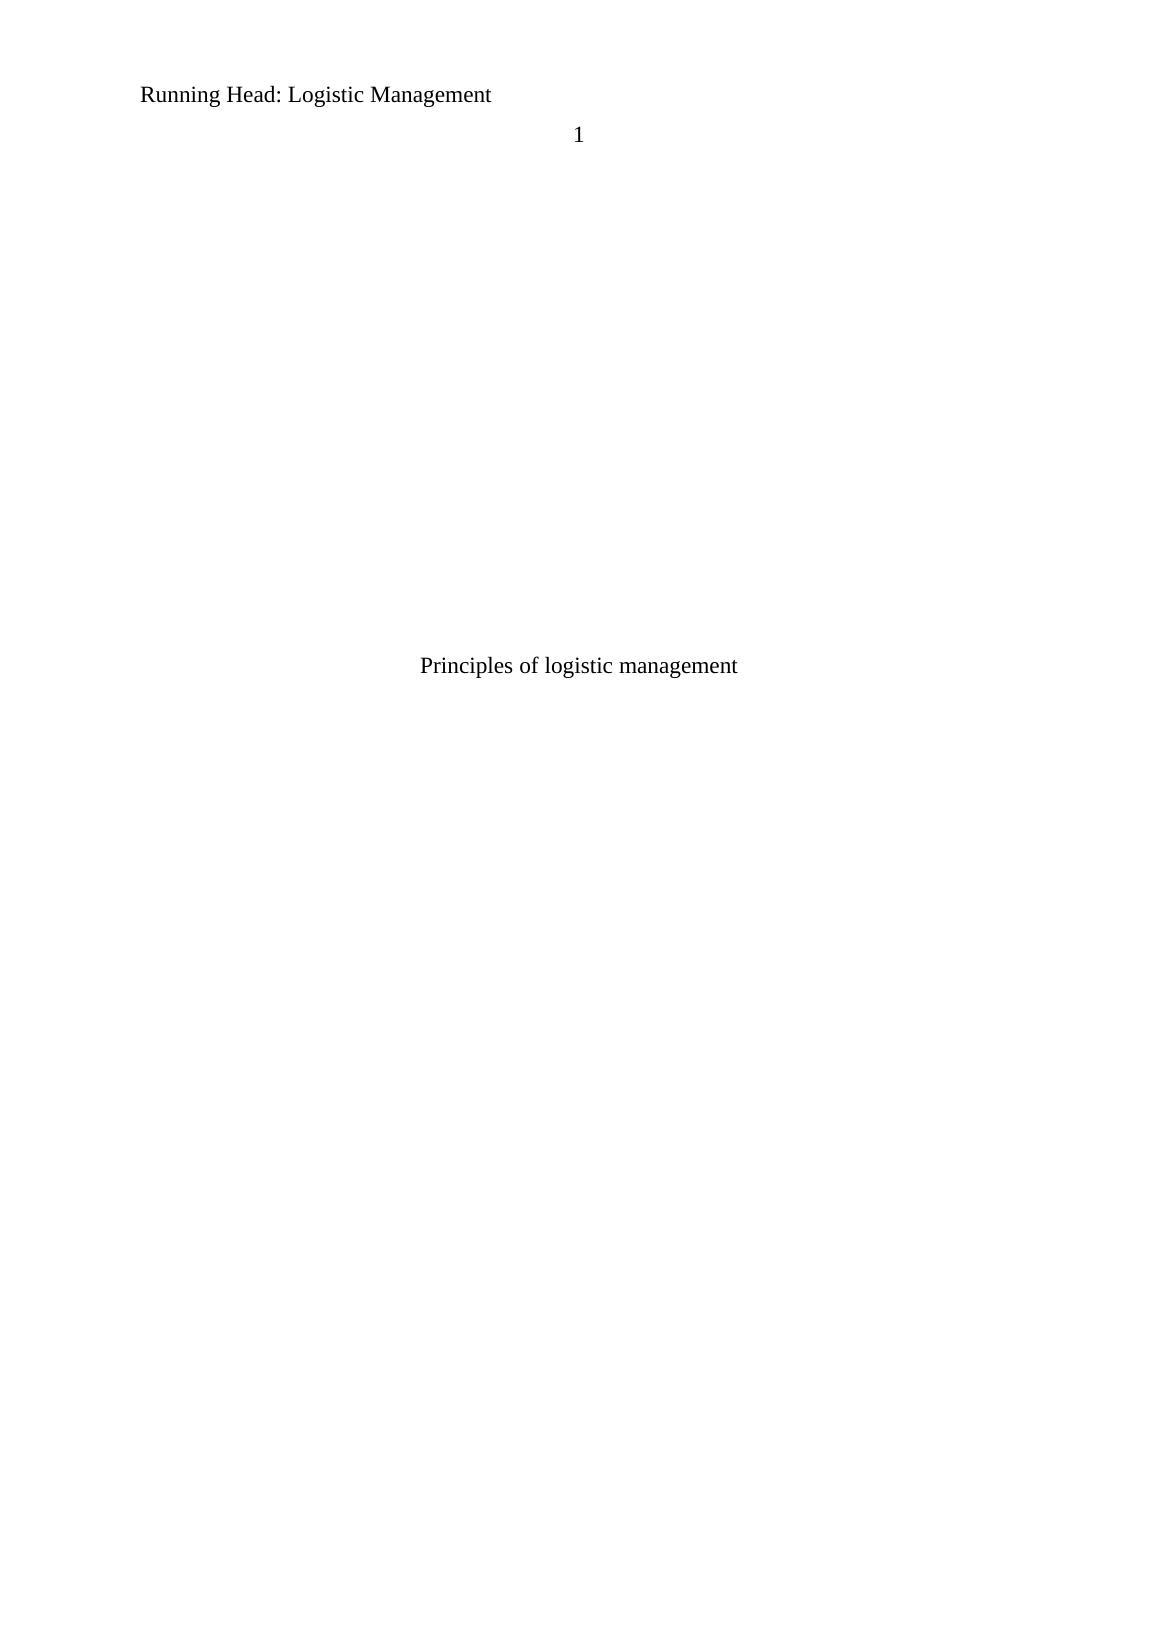 Assignment Principles of Logistic Management_1